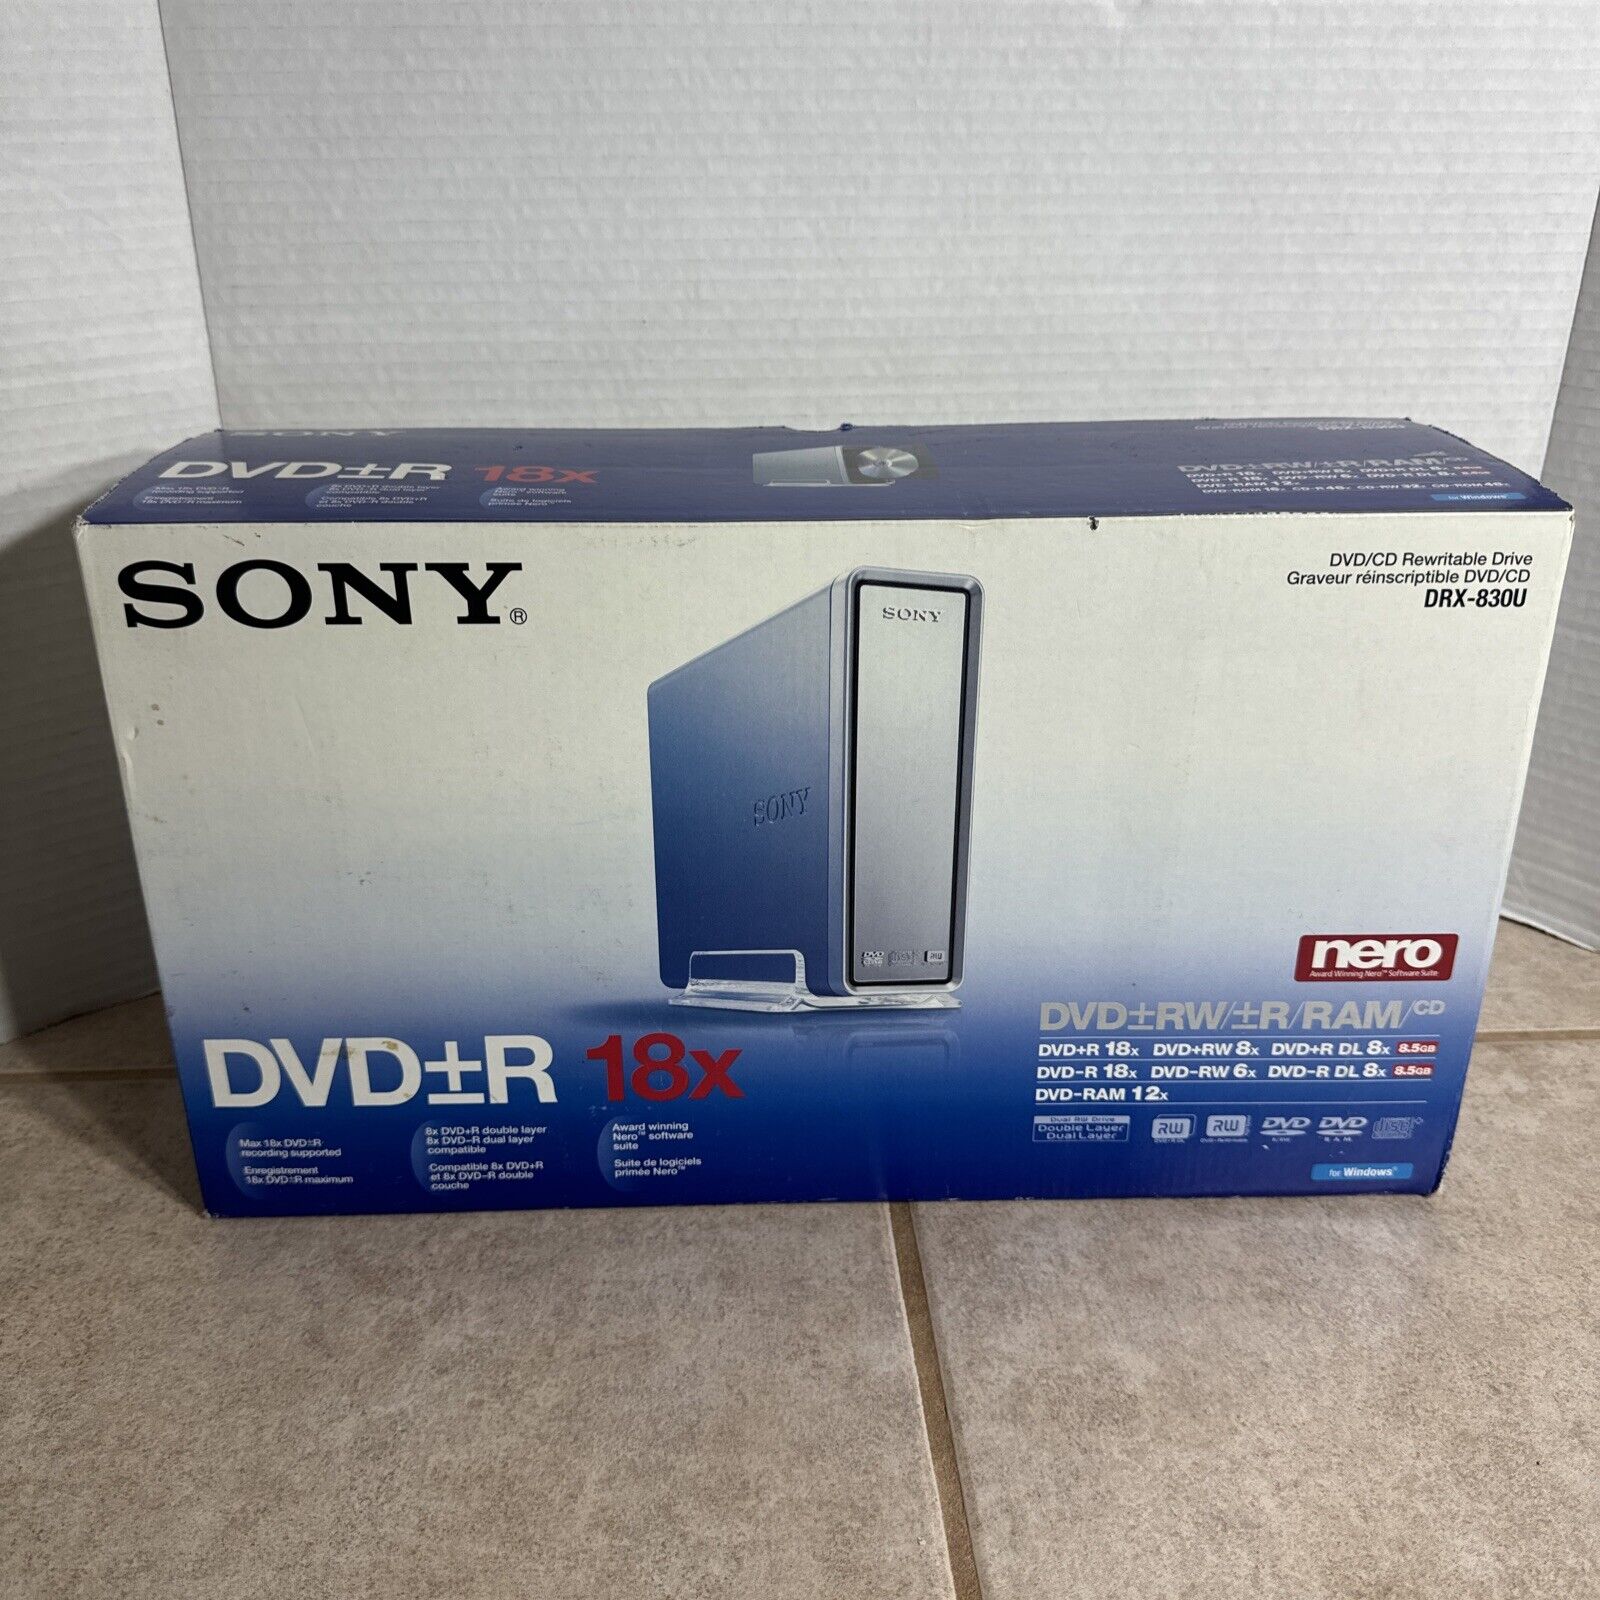 Sony DVD/CD+R 18X DRX-830U Rewritable Drive NERO Software Belkin USB NIB